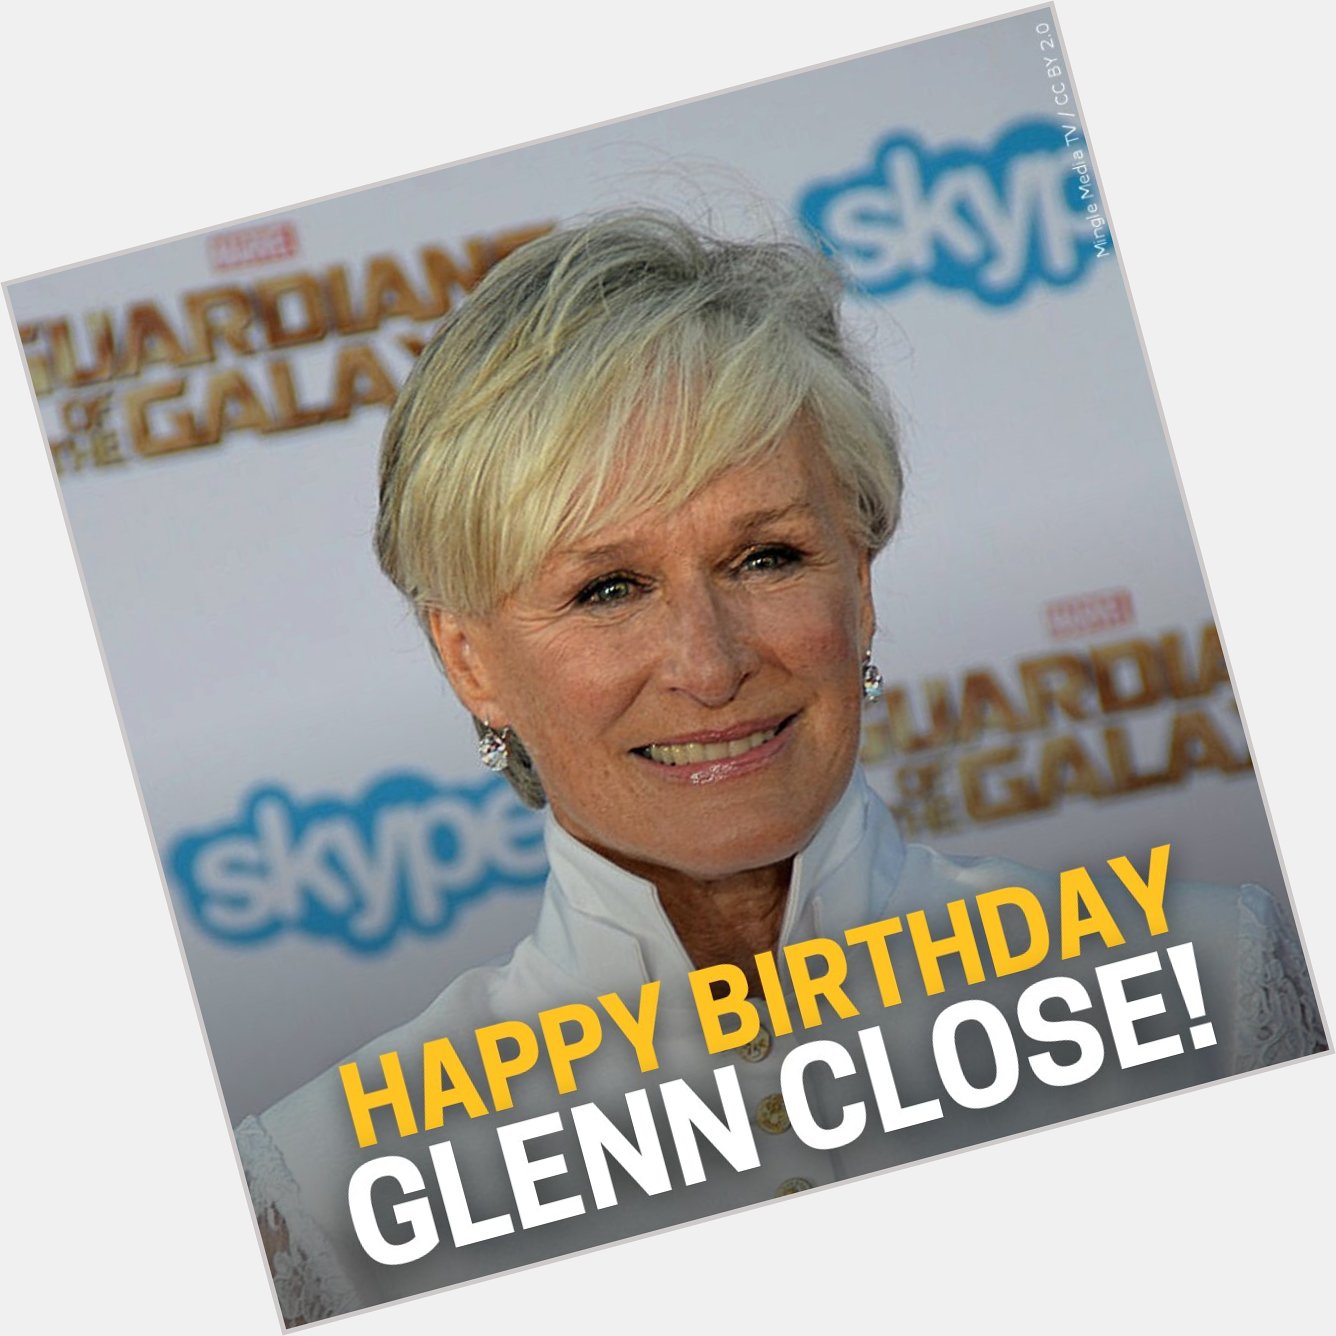 A Happy Birthday to Glenn Close! 